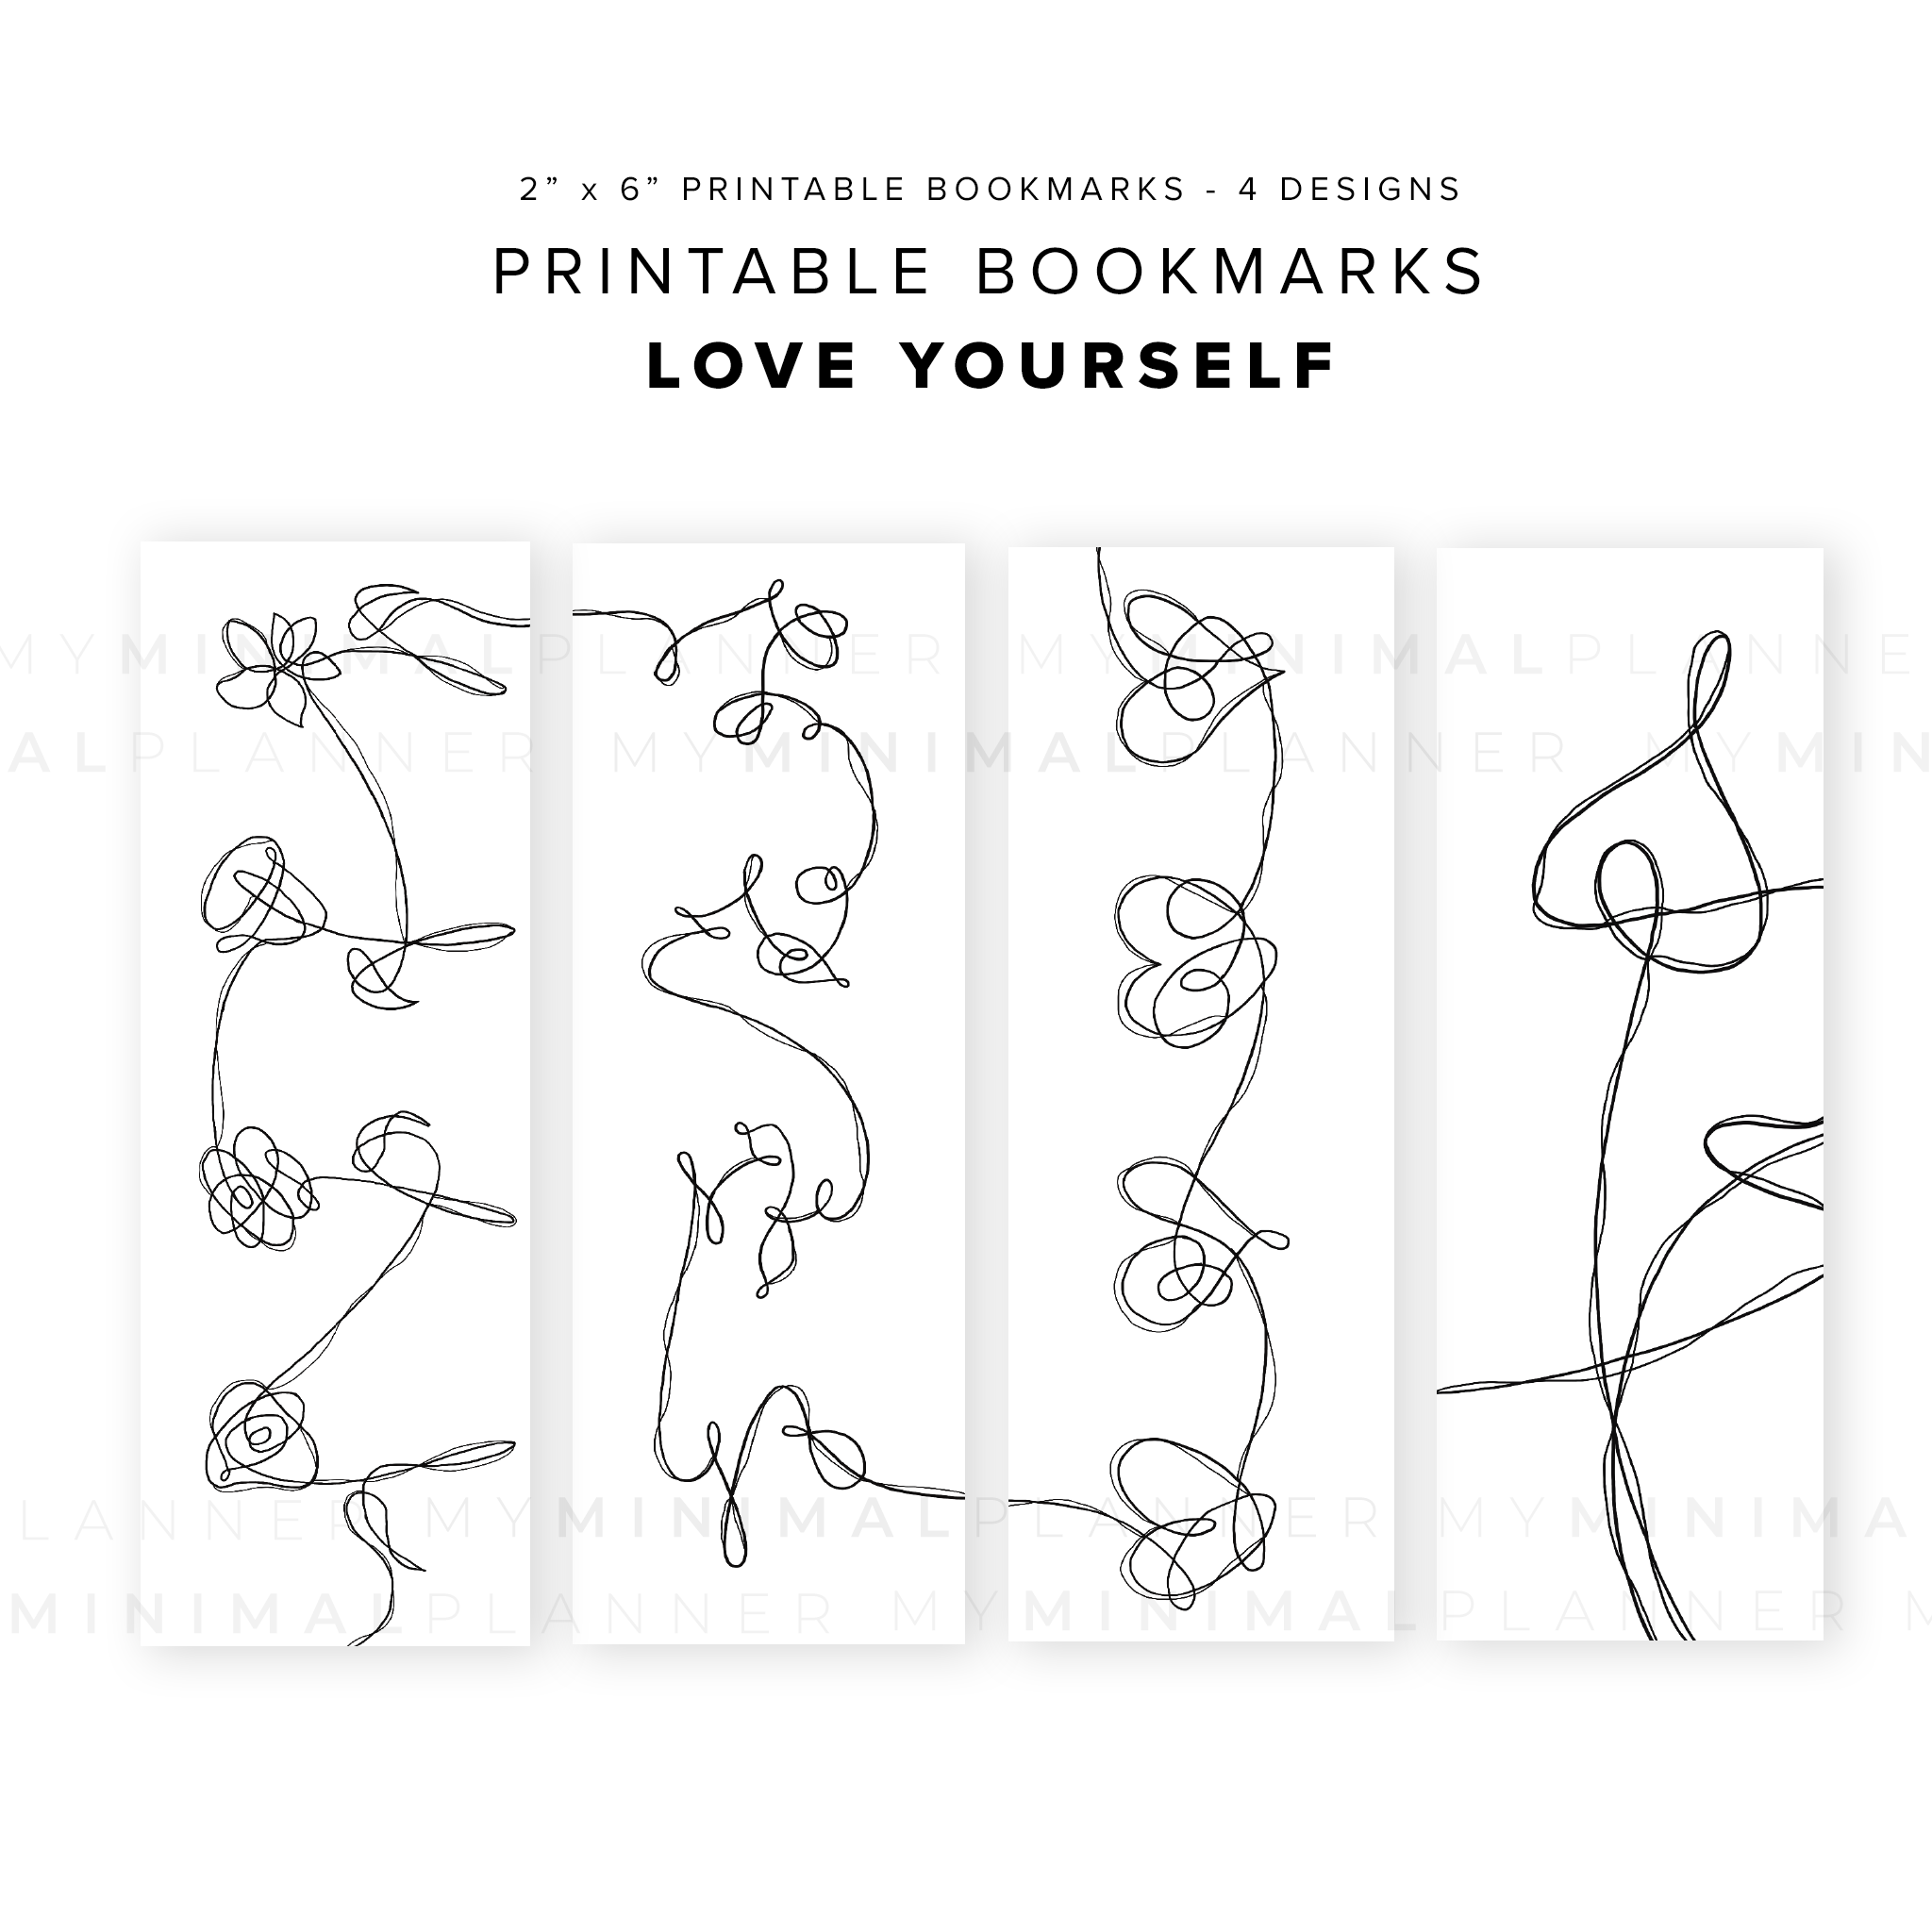 PB02 - Love Yourself - Printable Bookmarks